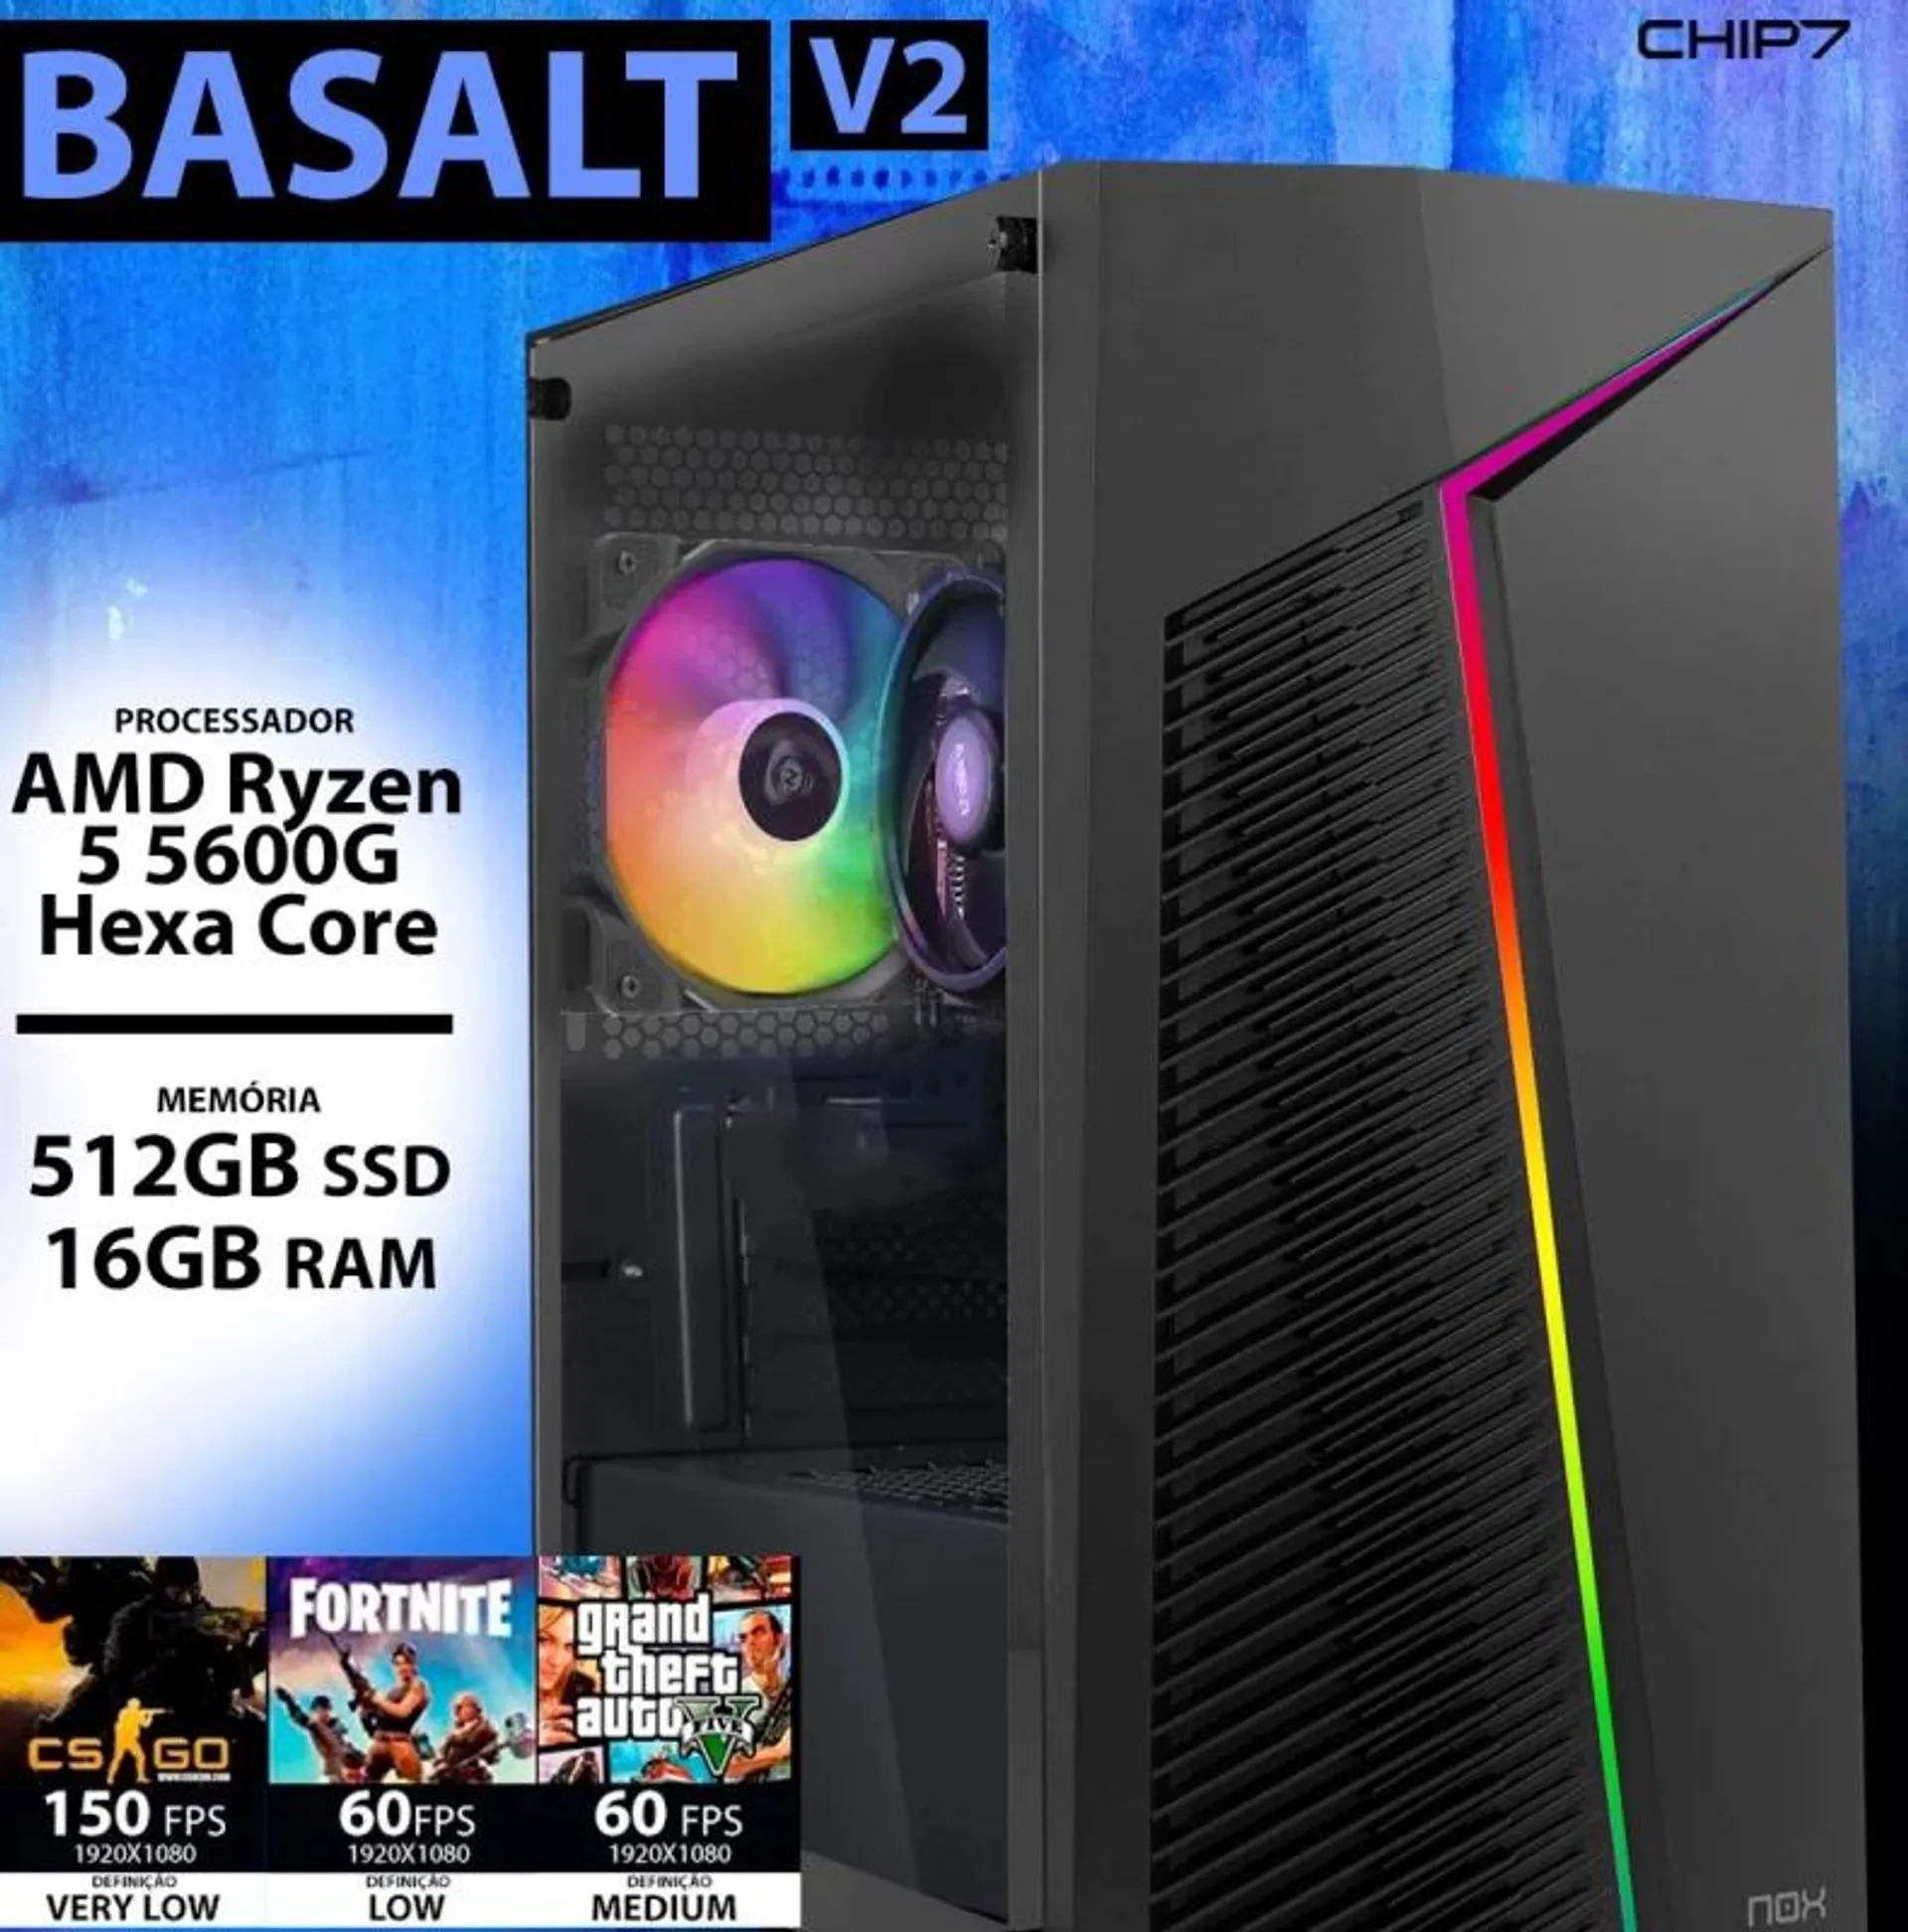 COMPUTADOR GAMING - AMD Ryzen 5 5600G / 16GB RAM / 512GB SSD - CHIP7 Basalt V2